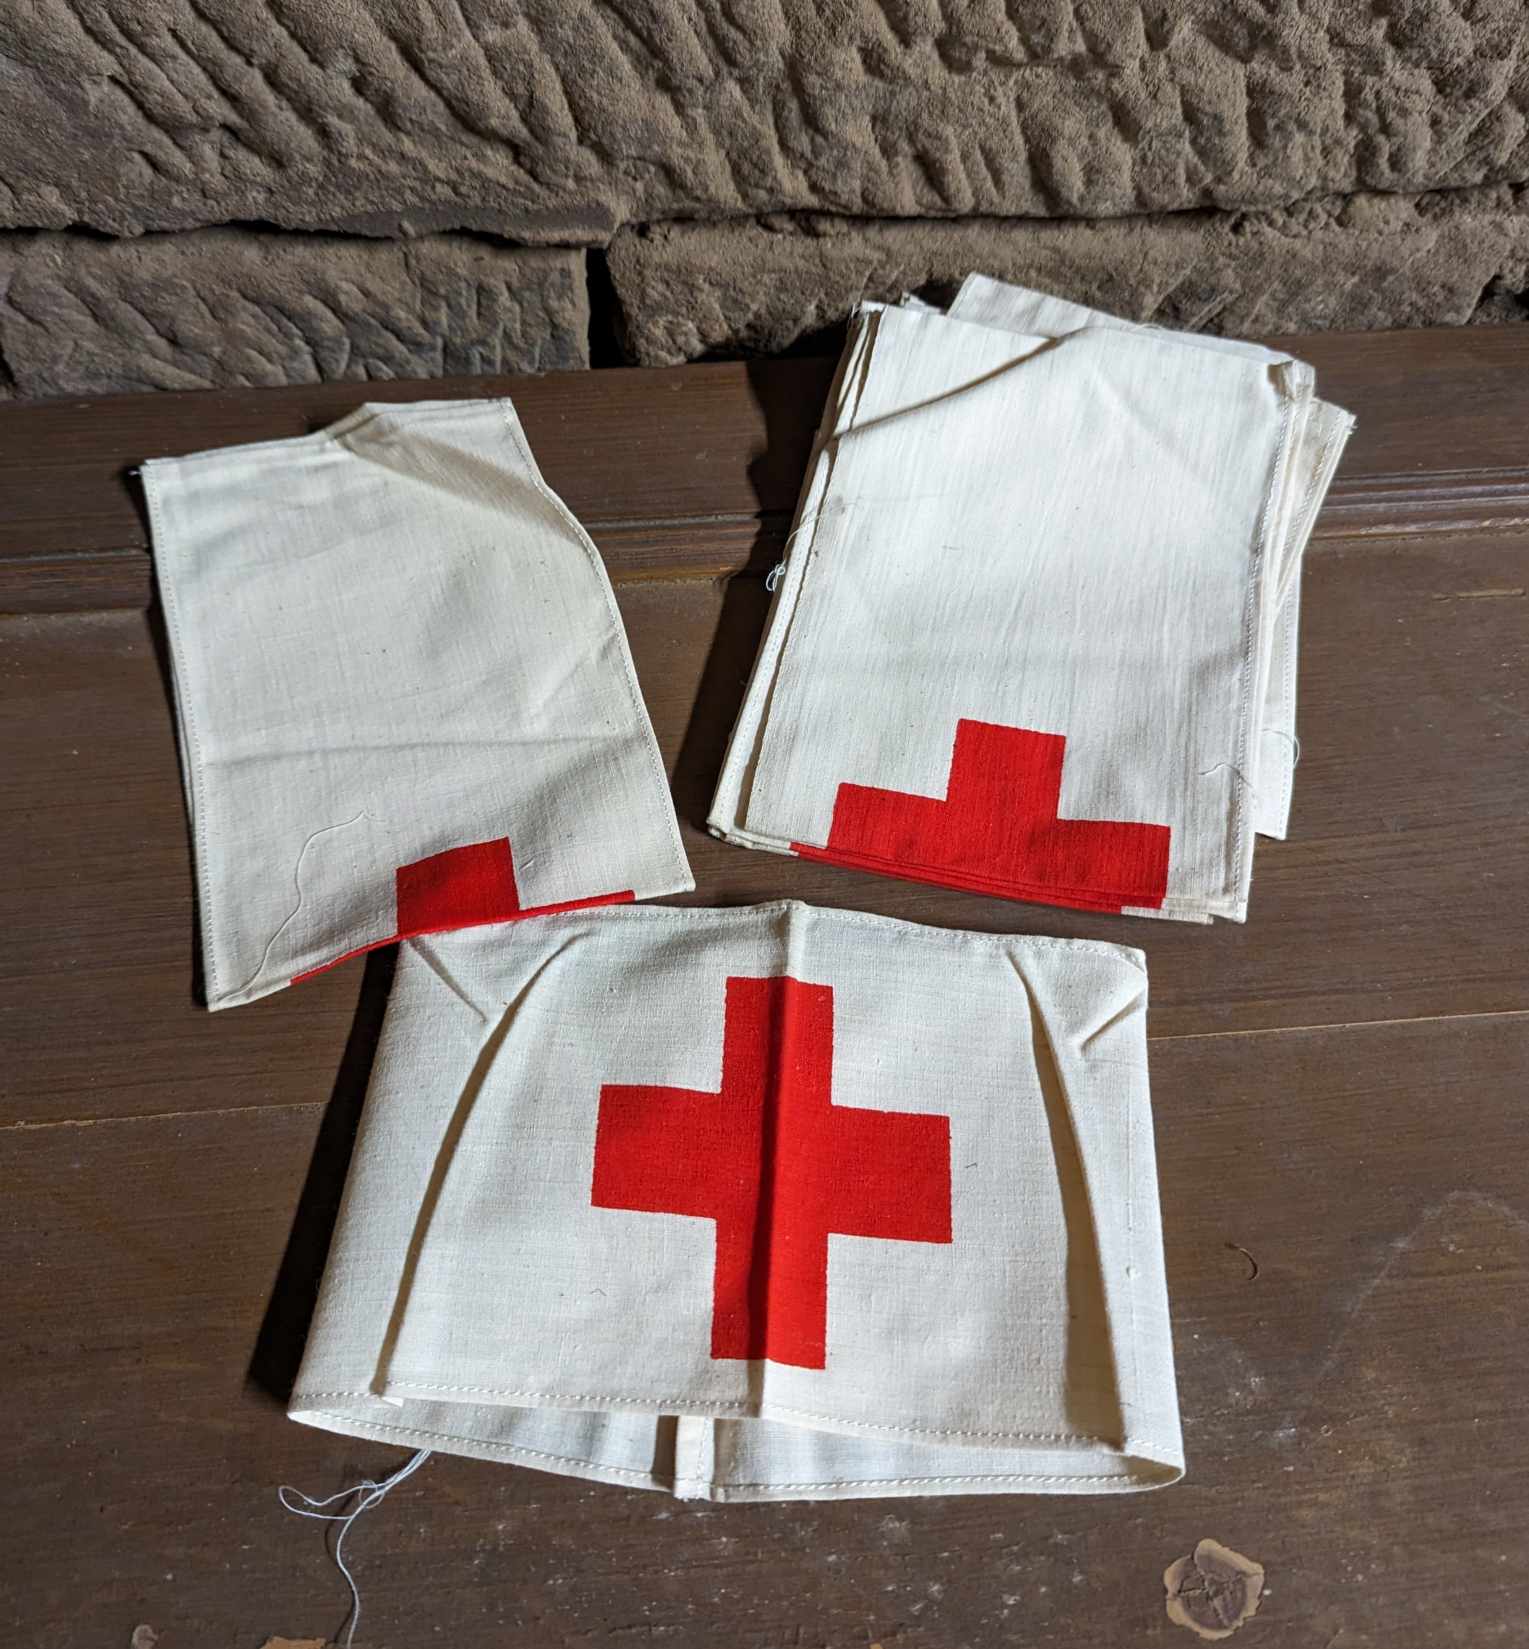 militaria : Brassard Croix Rouge allemand / ww2 german red cross armband